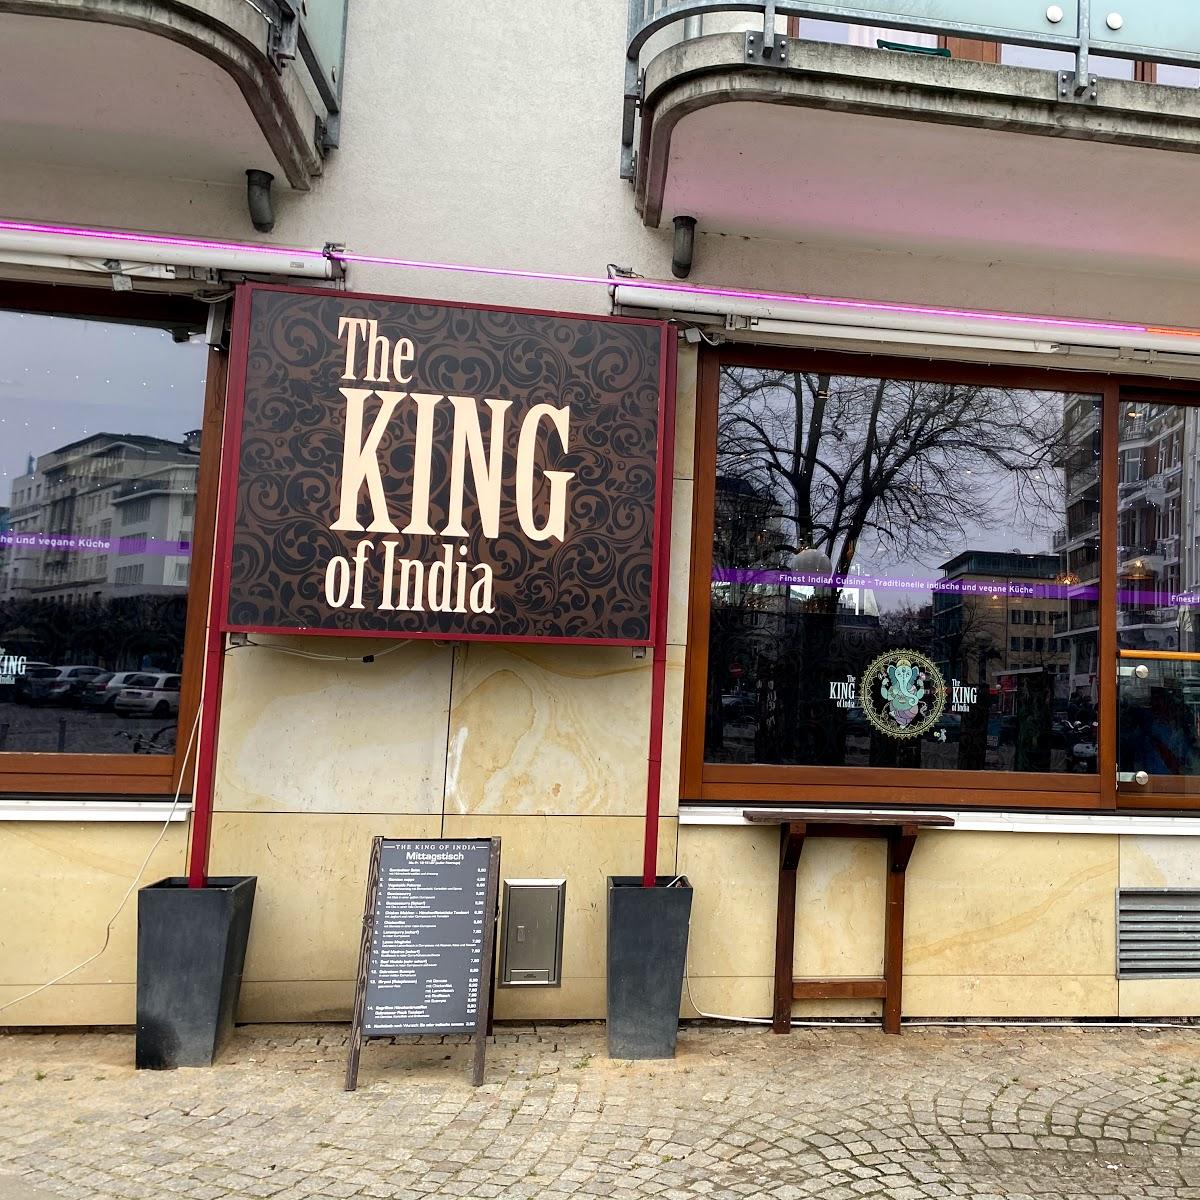 Restaurant "The King of India" in Hamburg